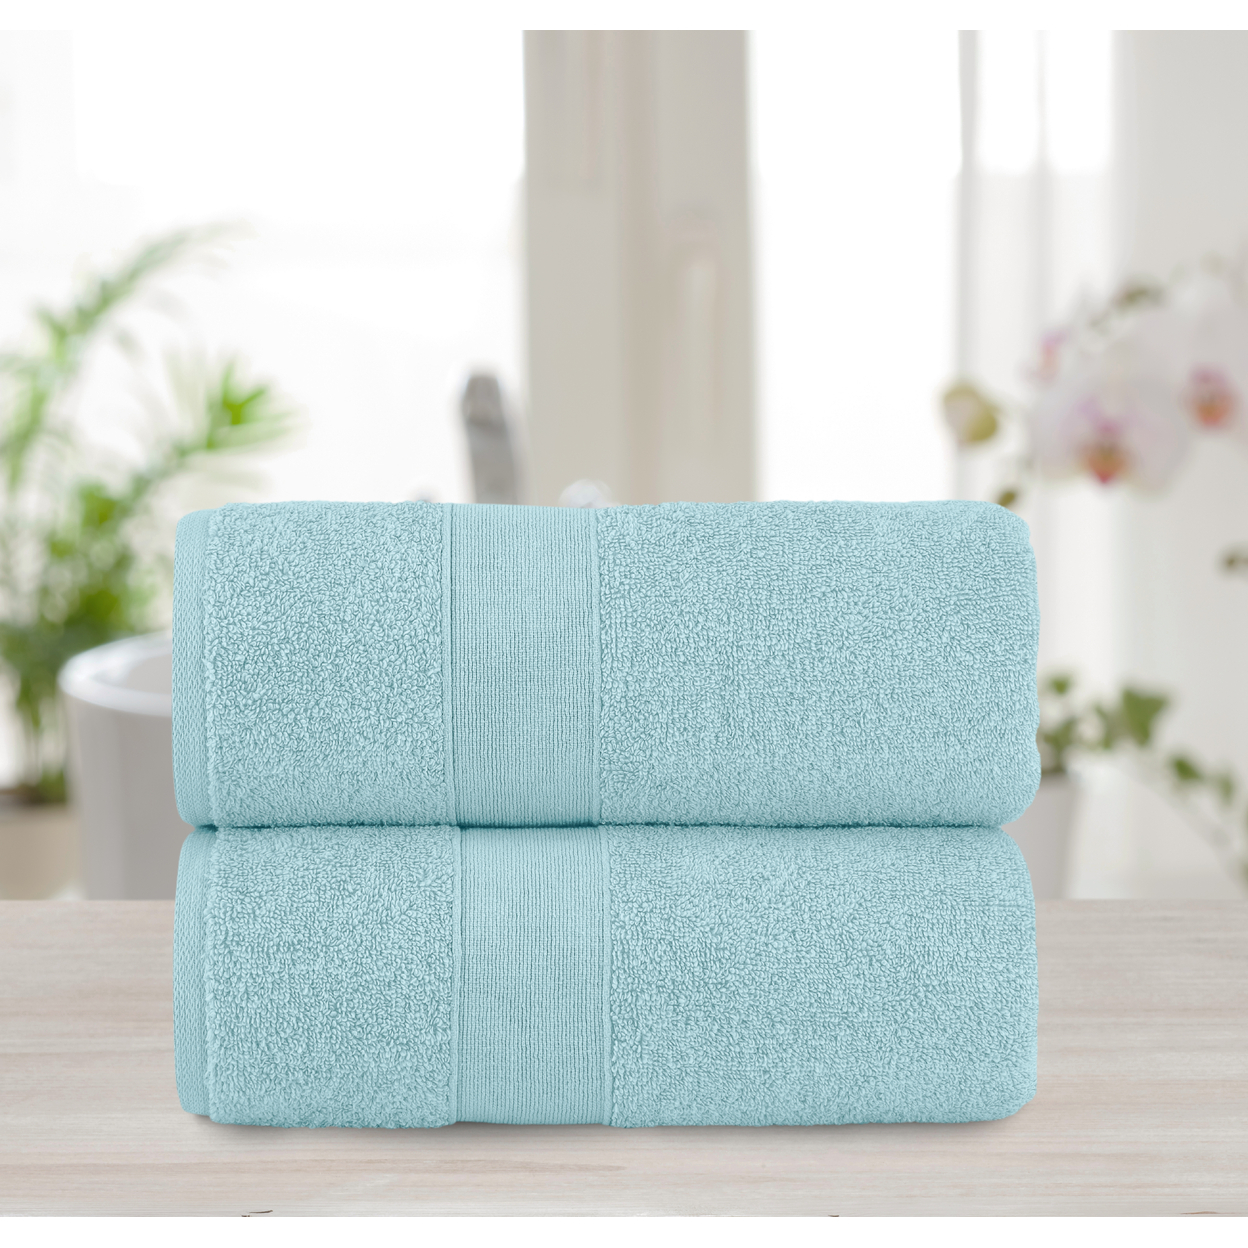 Chic Home Luxurious 2-Piece 100% Pure Turkish Cotton Bath Sheet Towels, 30x68, Woven Dobby Border Design, OEKO-TEX Certified Set - Blue